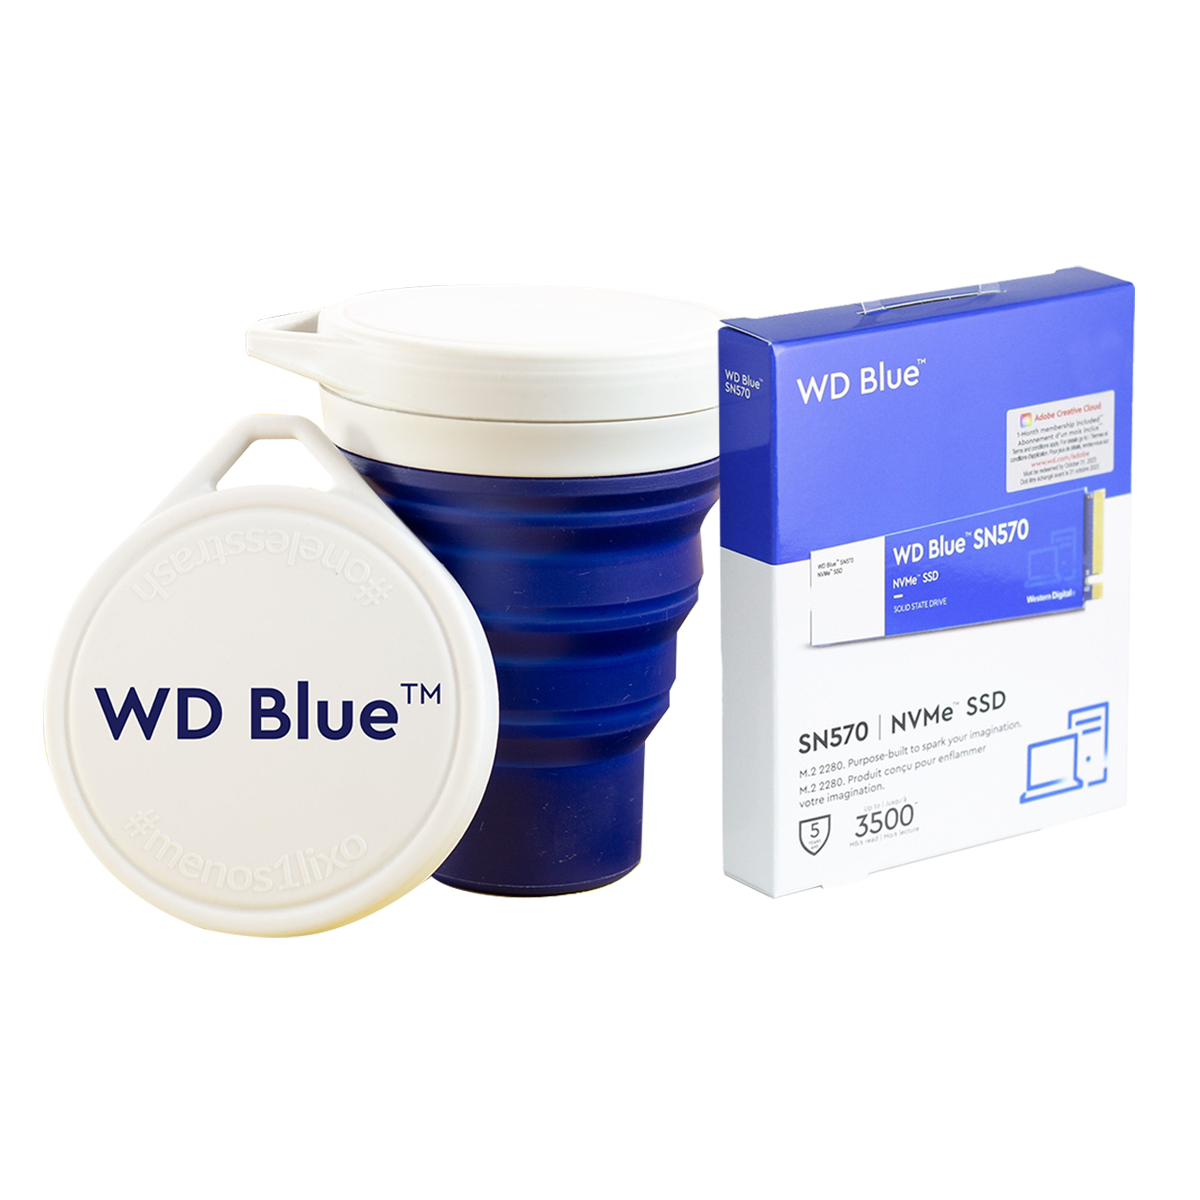 SSD WD Blue SN570 NVMe M.2, 500GB, Leitura 3500MBs e Gravação 2300MBs + Copo WD Blue